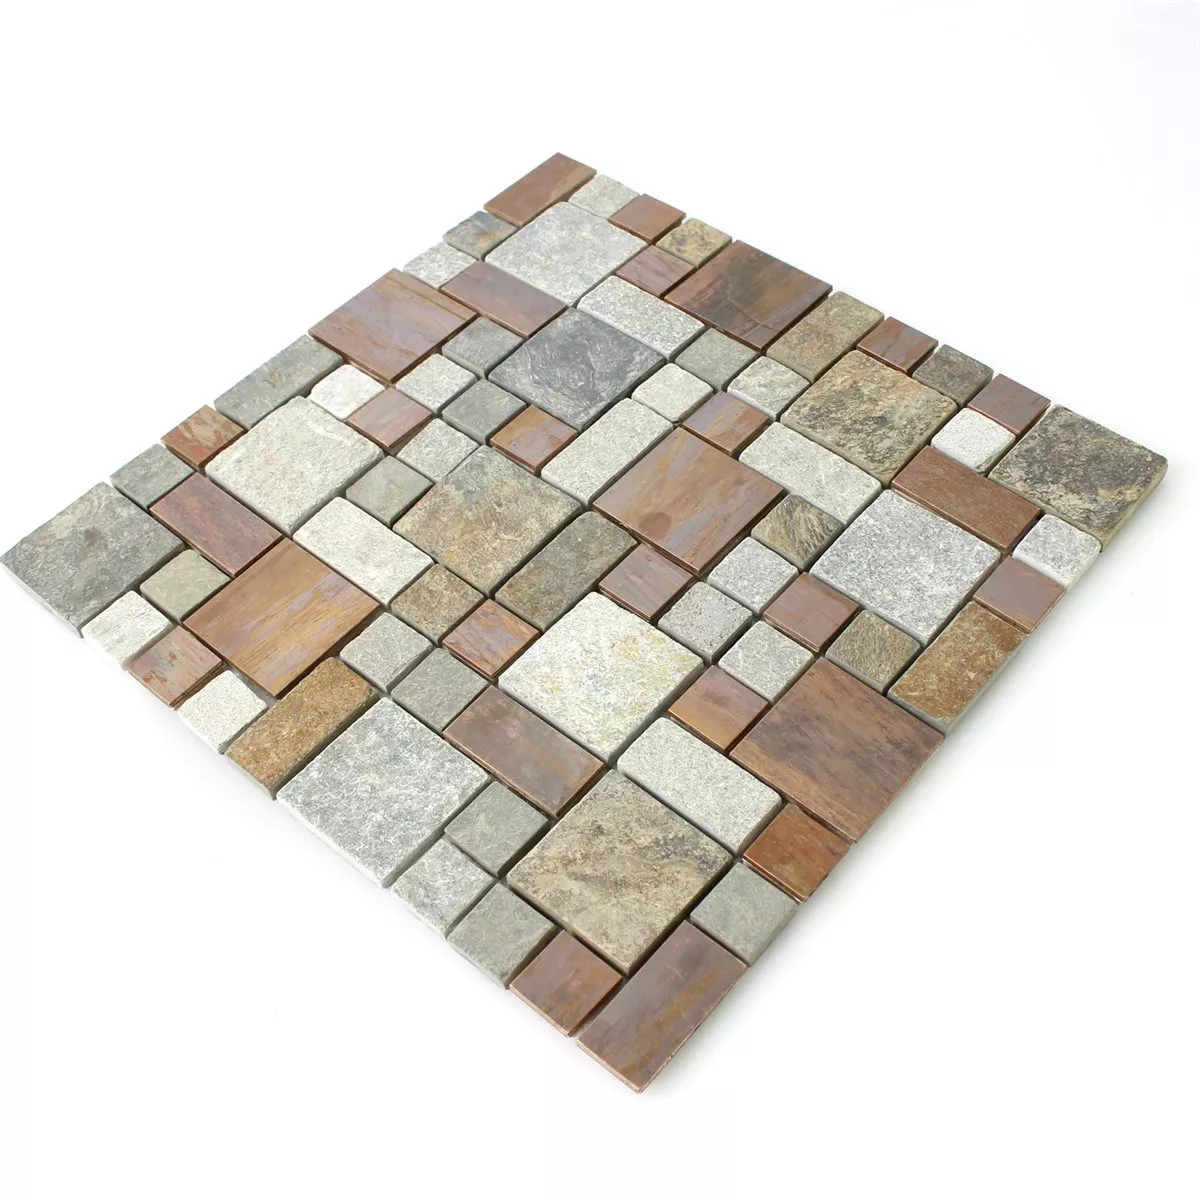 Sample Mosaic Tiles Copper Metal Natural Stone Mix